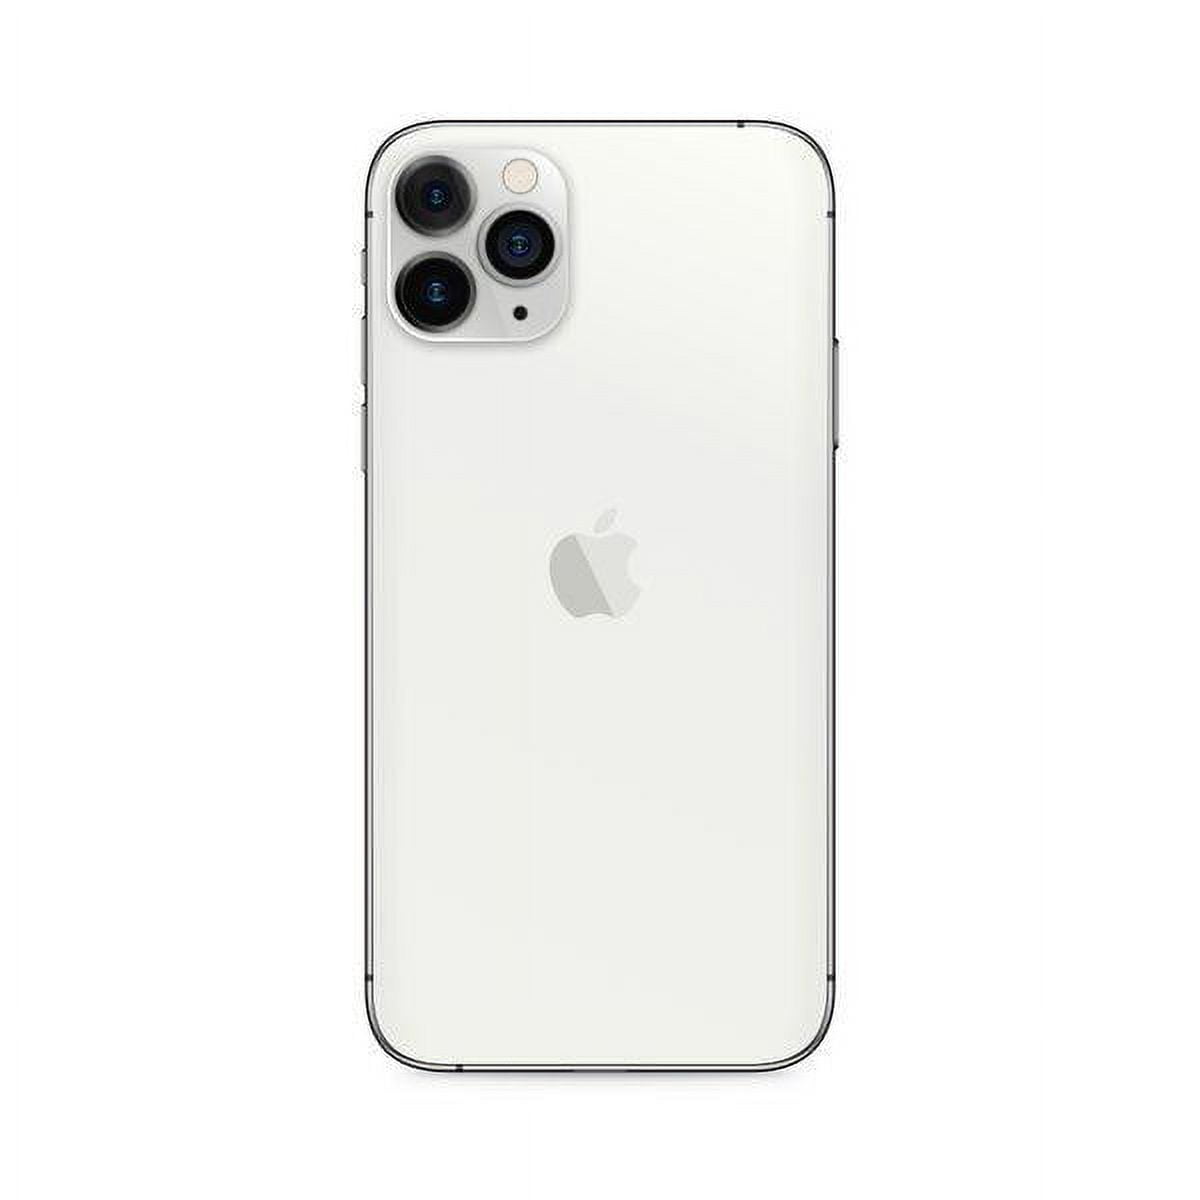 Pre-Owned Apple iPhone 11 Pro 64GB Silver - Fully Unlocked (Fair) -  Walmart.com